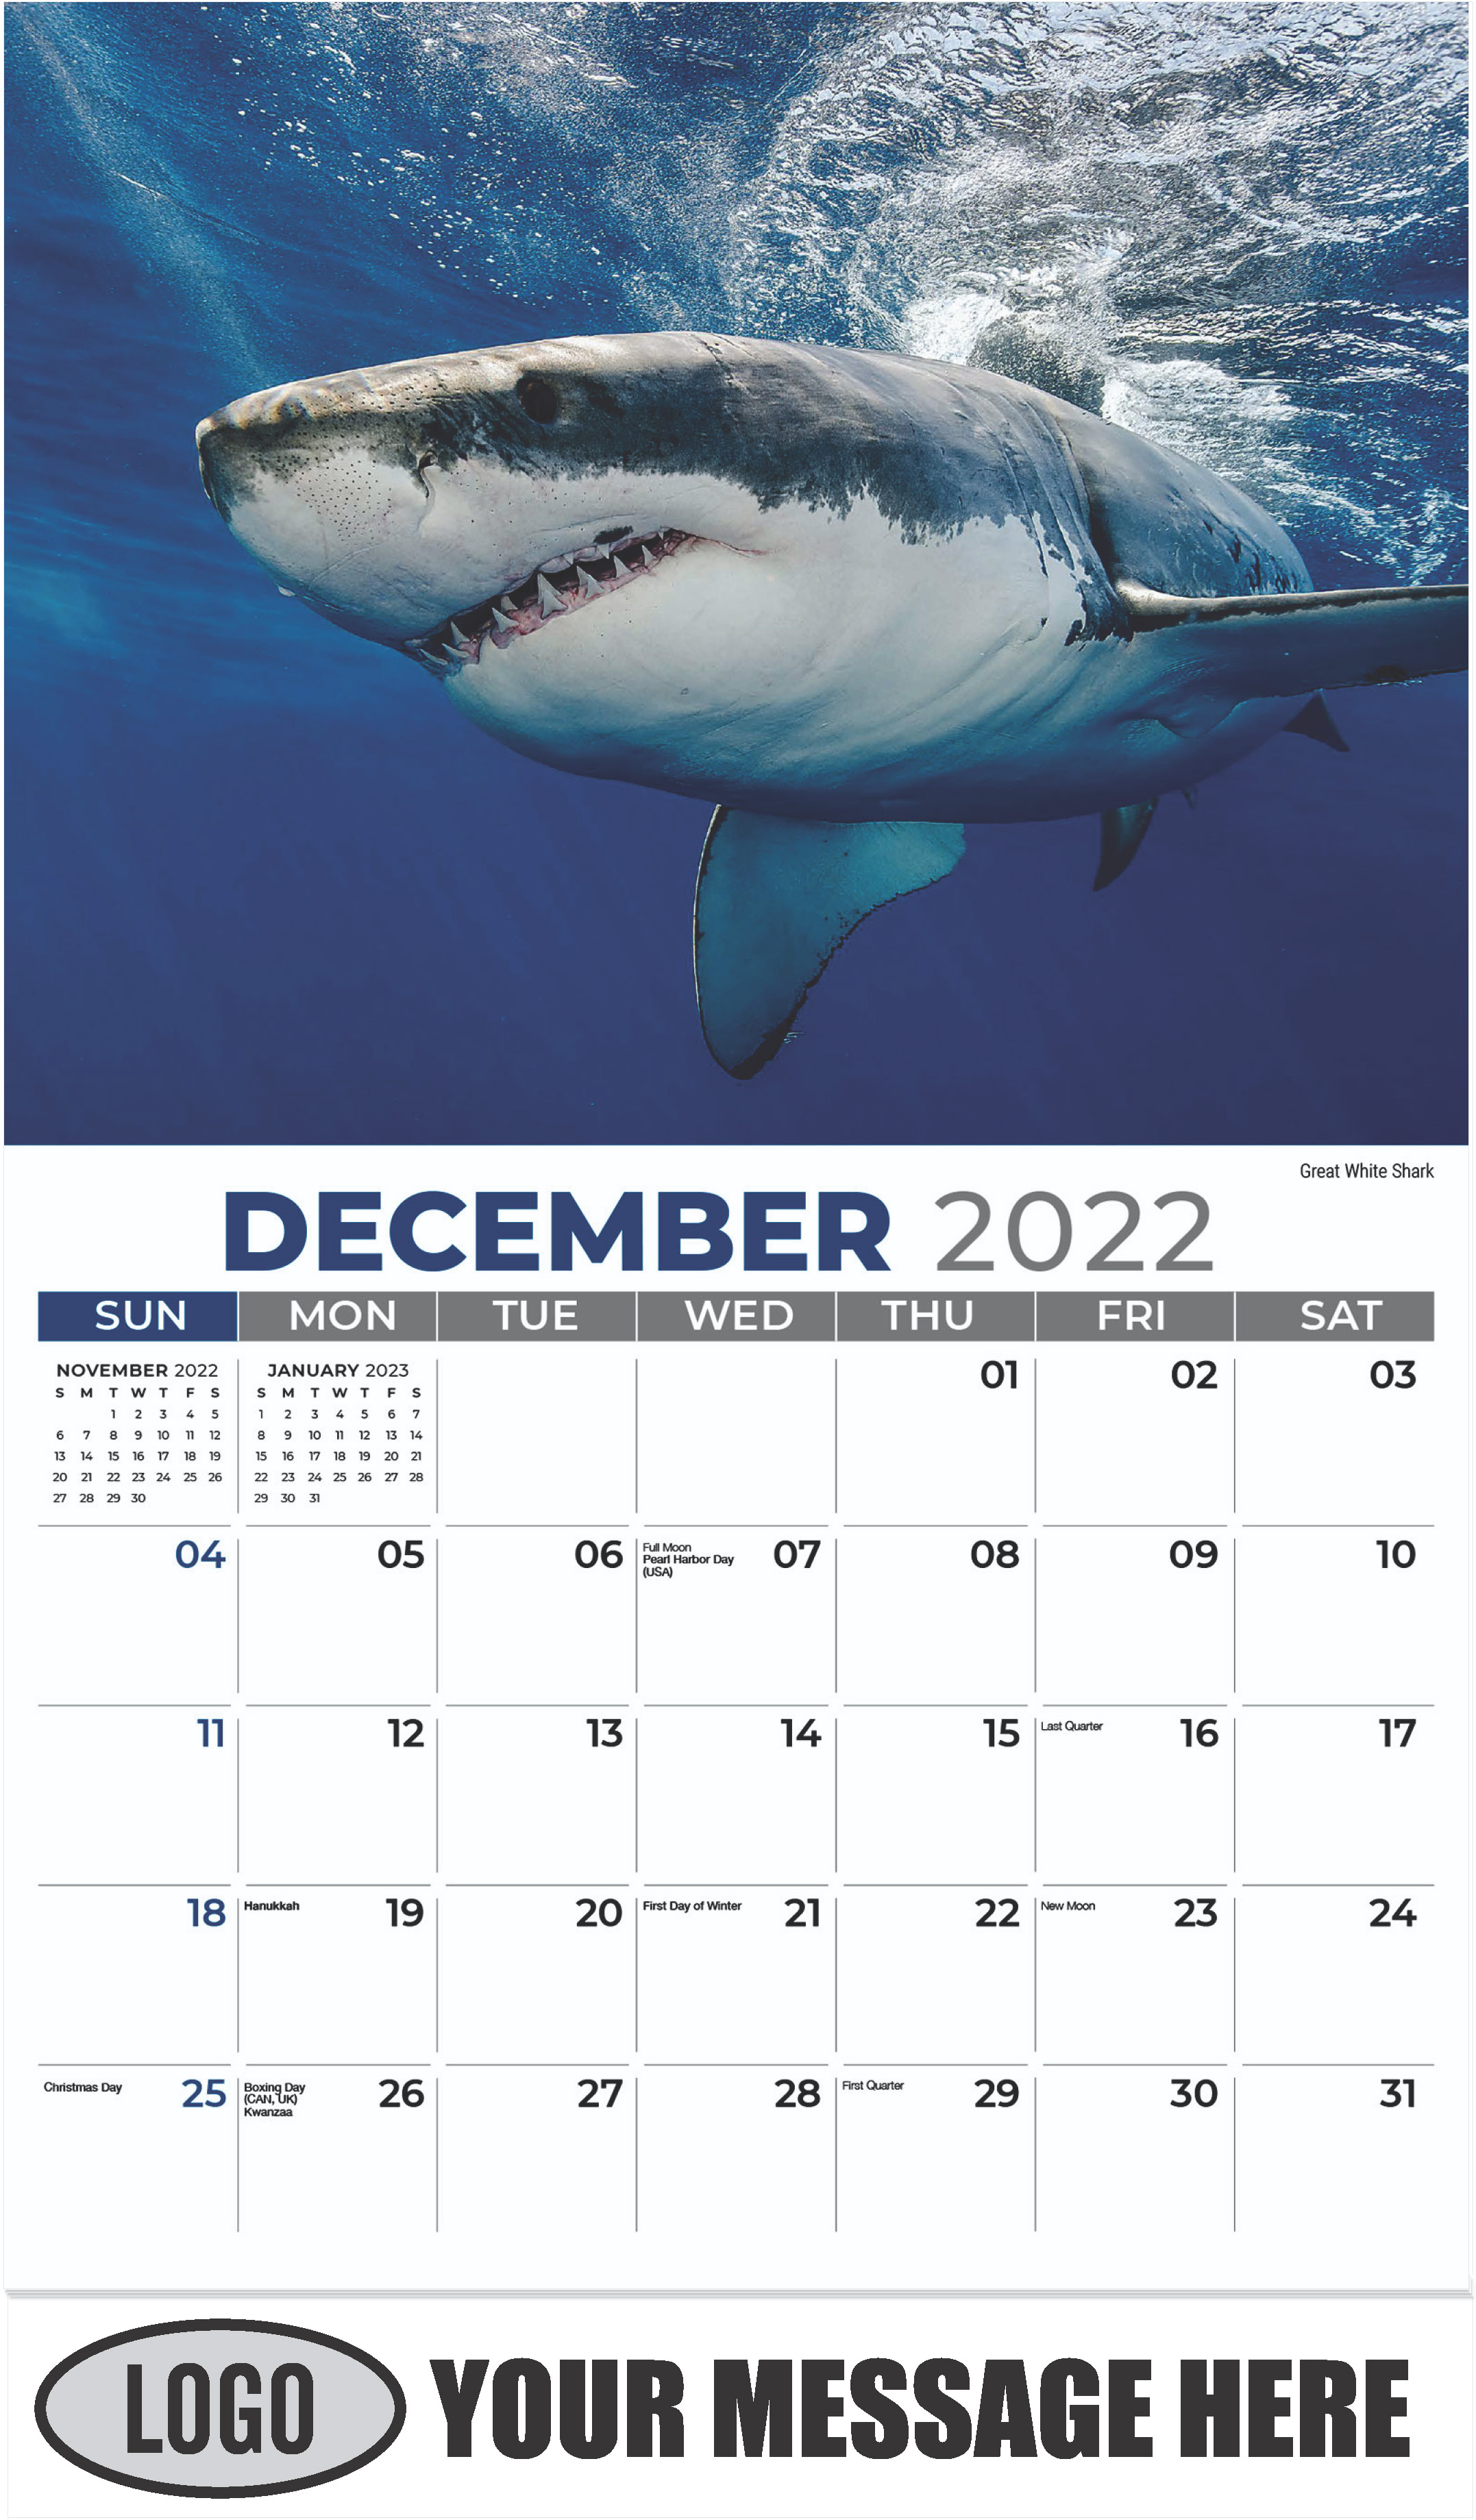 Great White Shark - December 2022 - International Wildlife 2023 Promotional Calendar